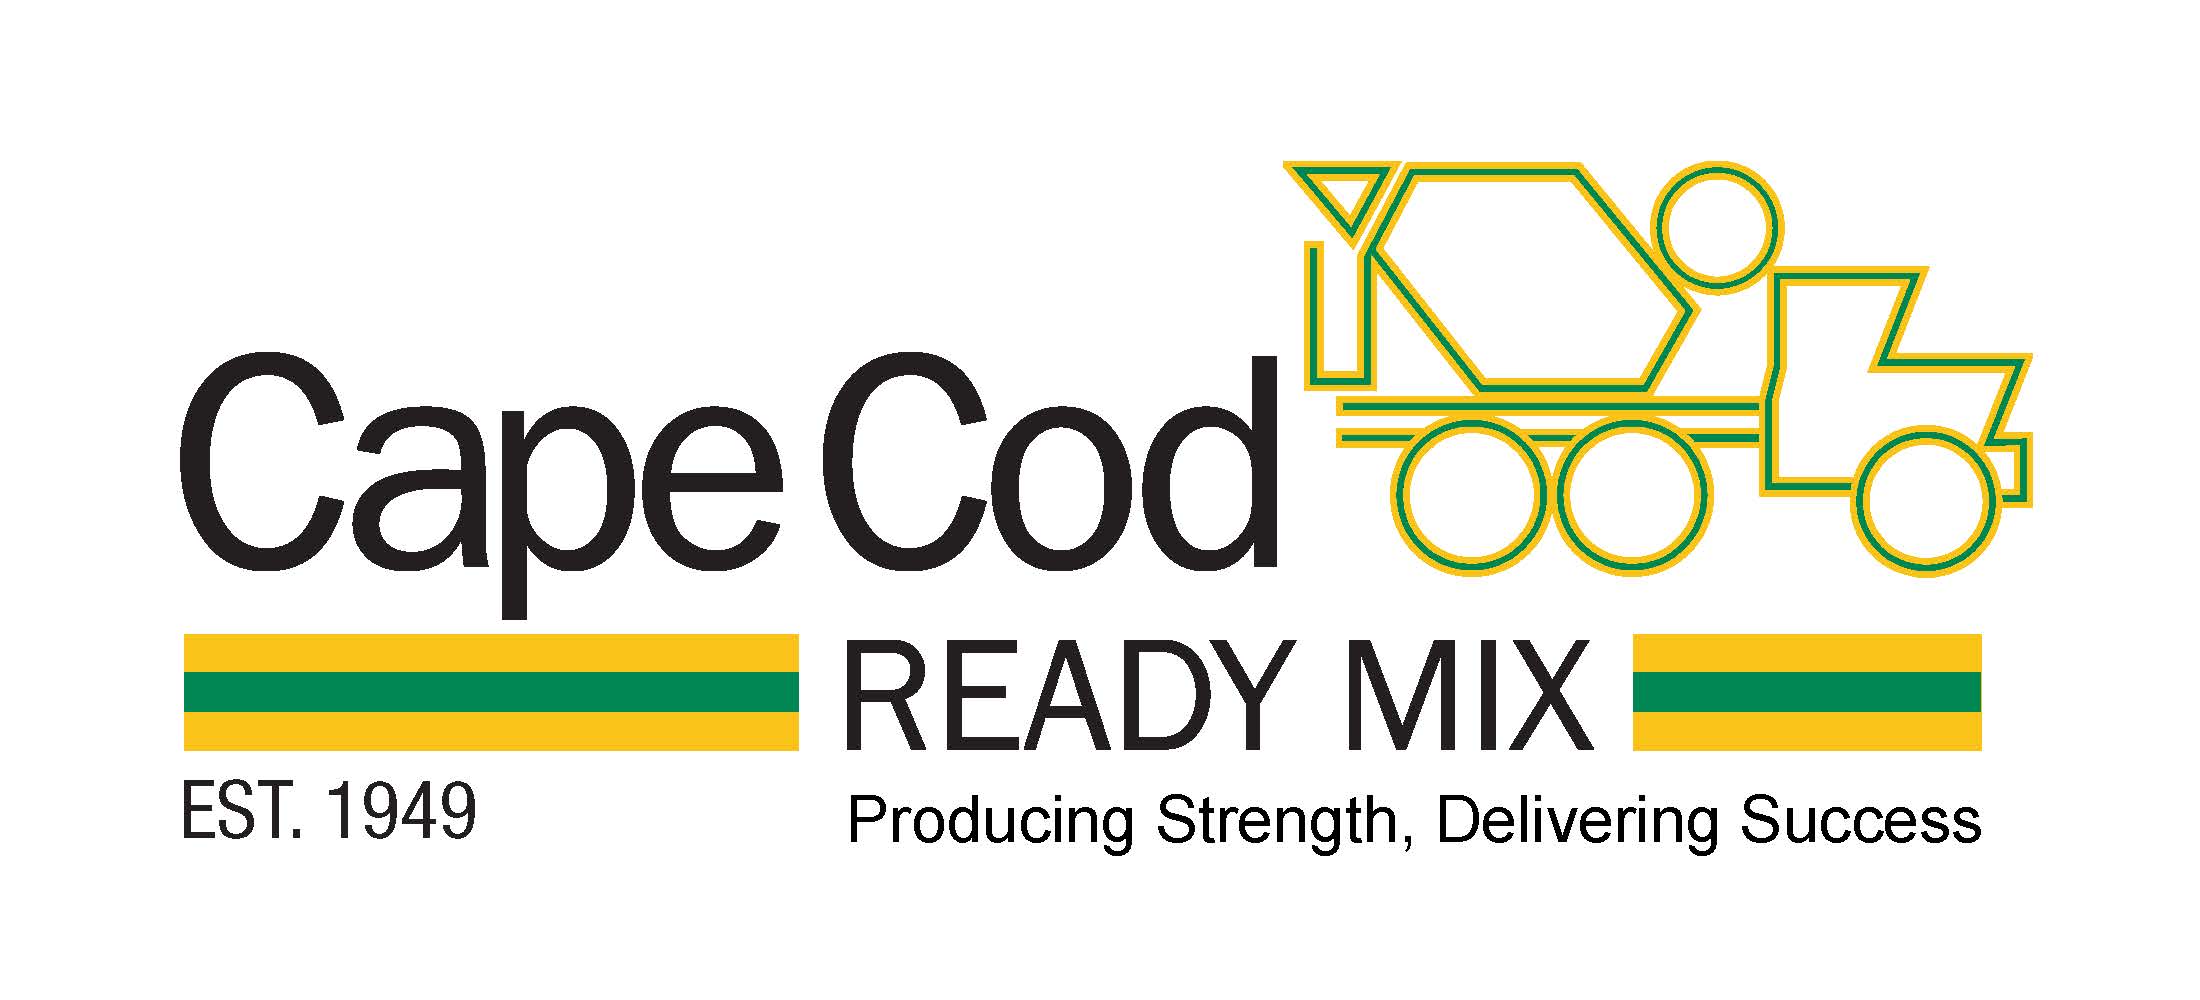 Cape Cod ready mix logo